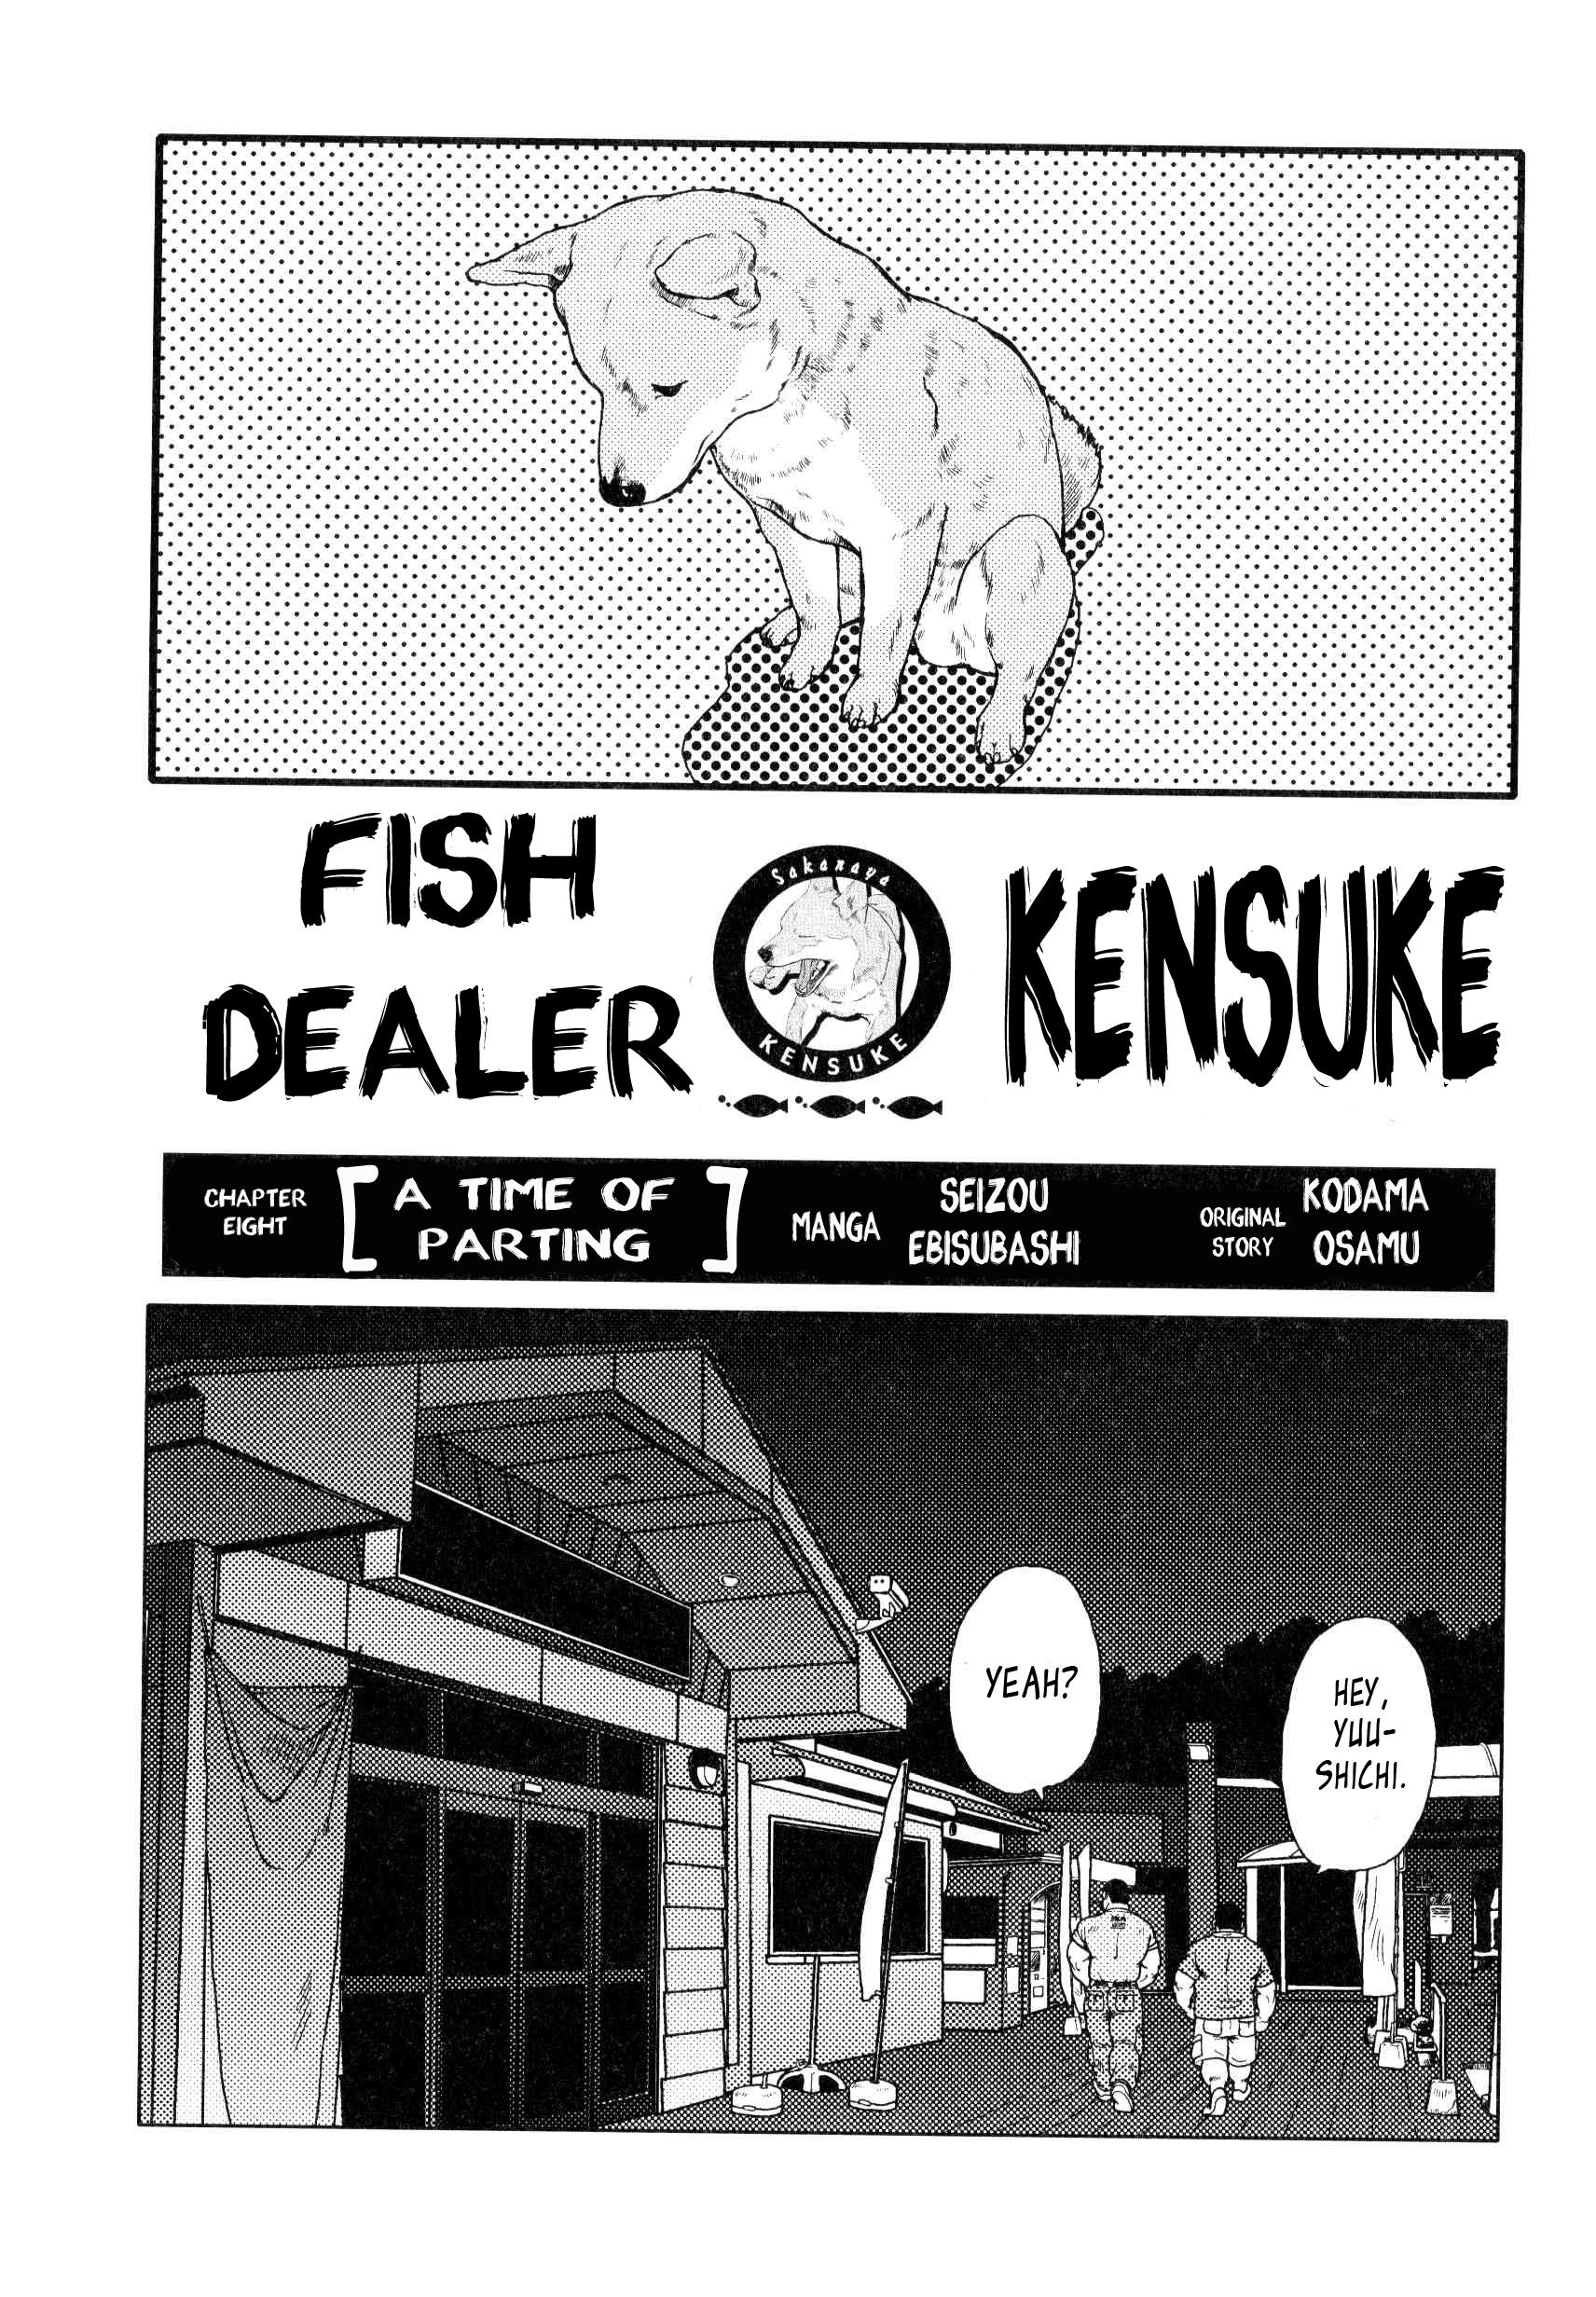 Fish Dealer Kensuke 164